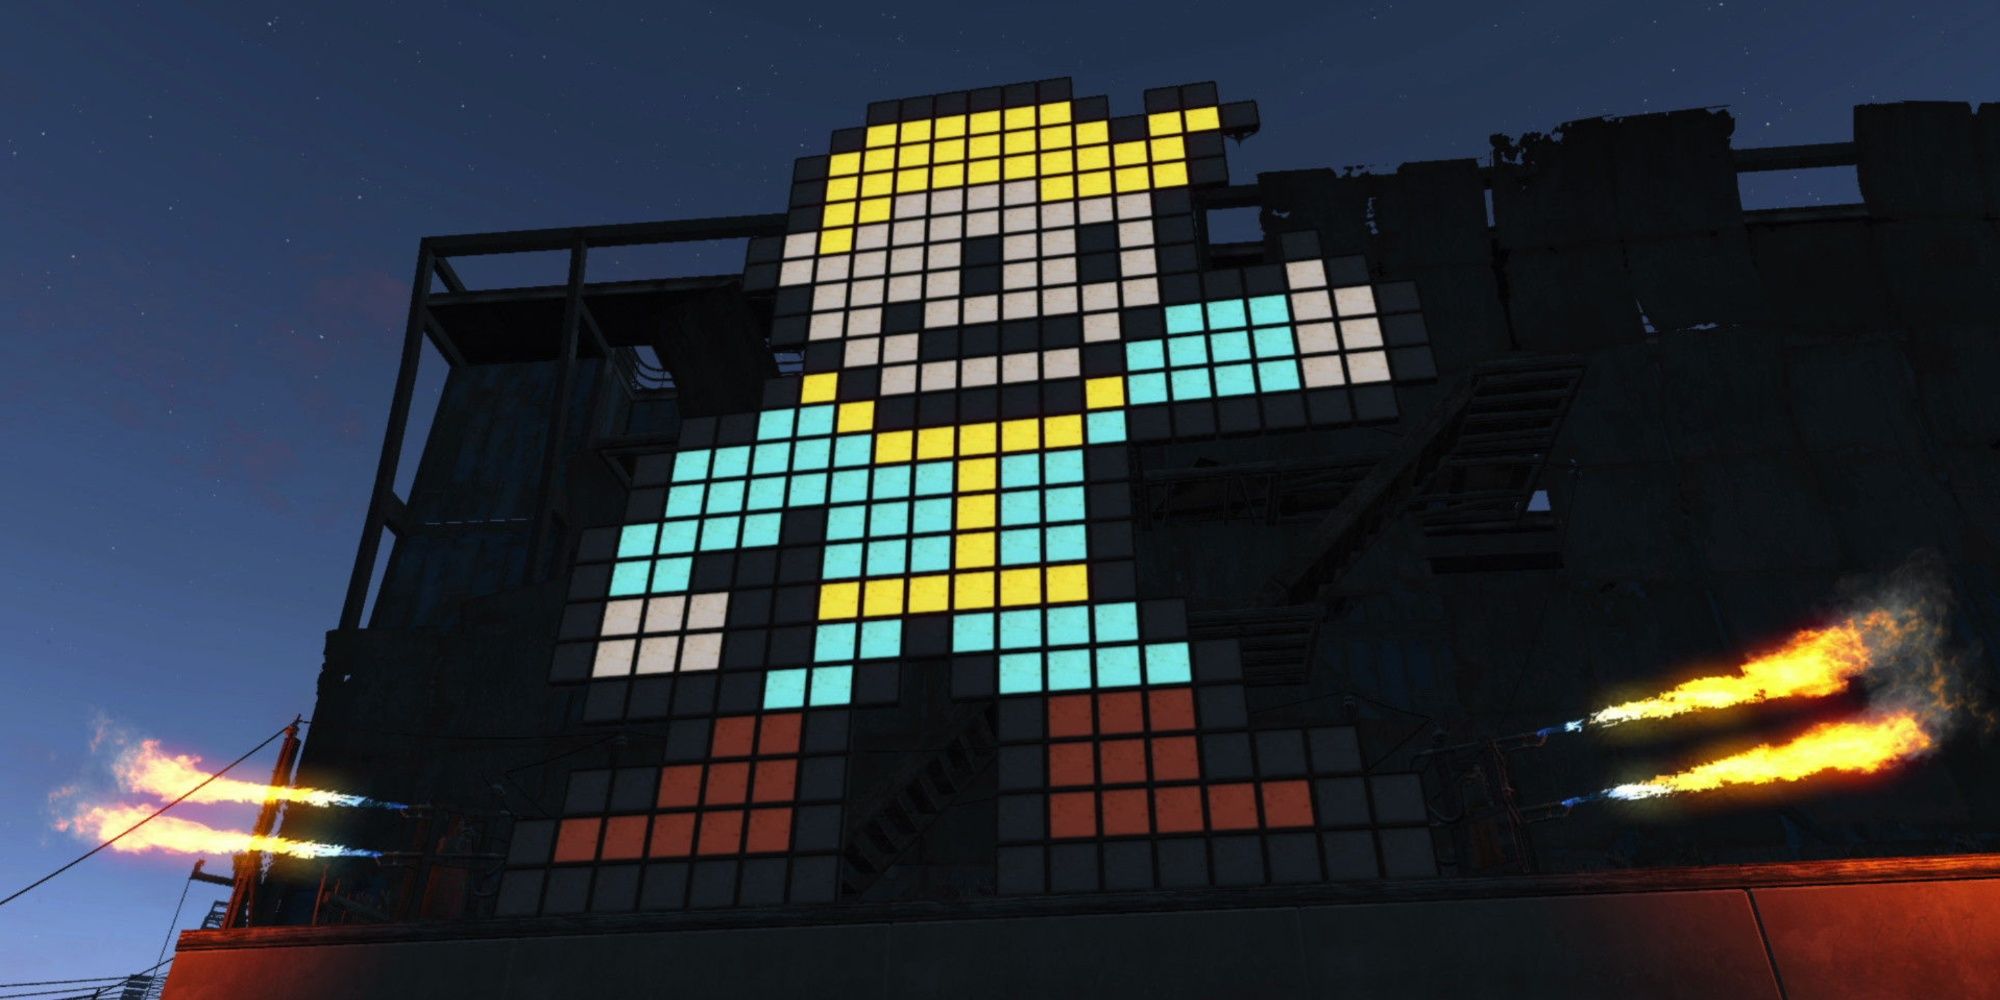 vault boy pixelated billboard in fallout 4